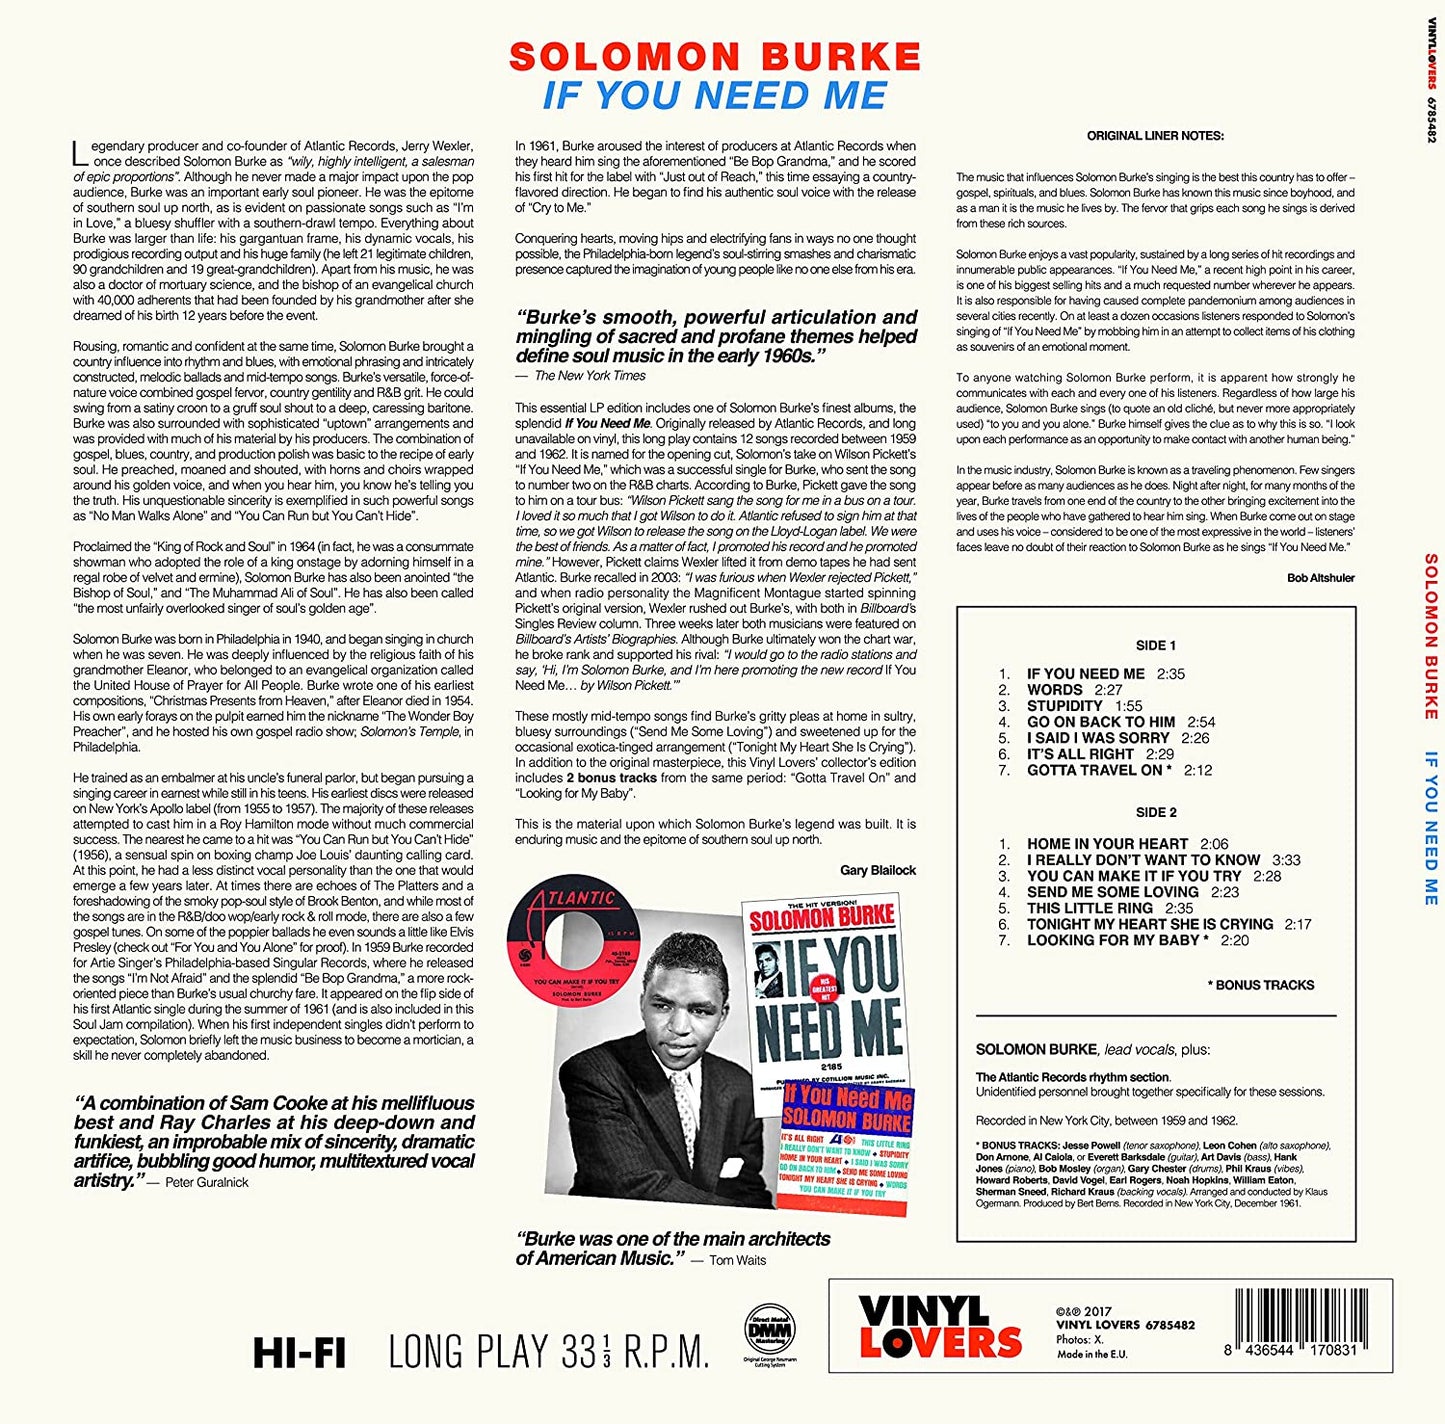 Burke, Soloman/If You Need Me [LP]